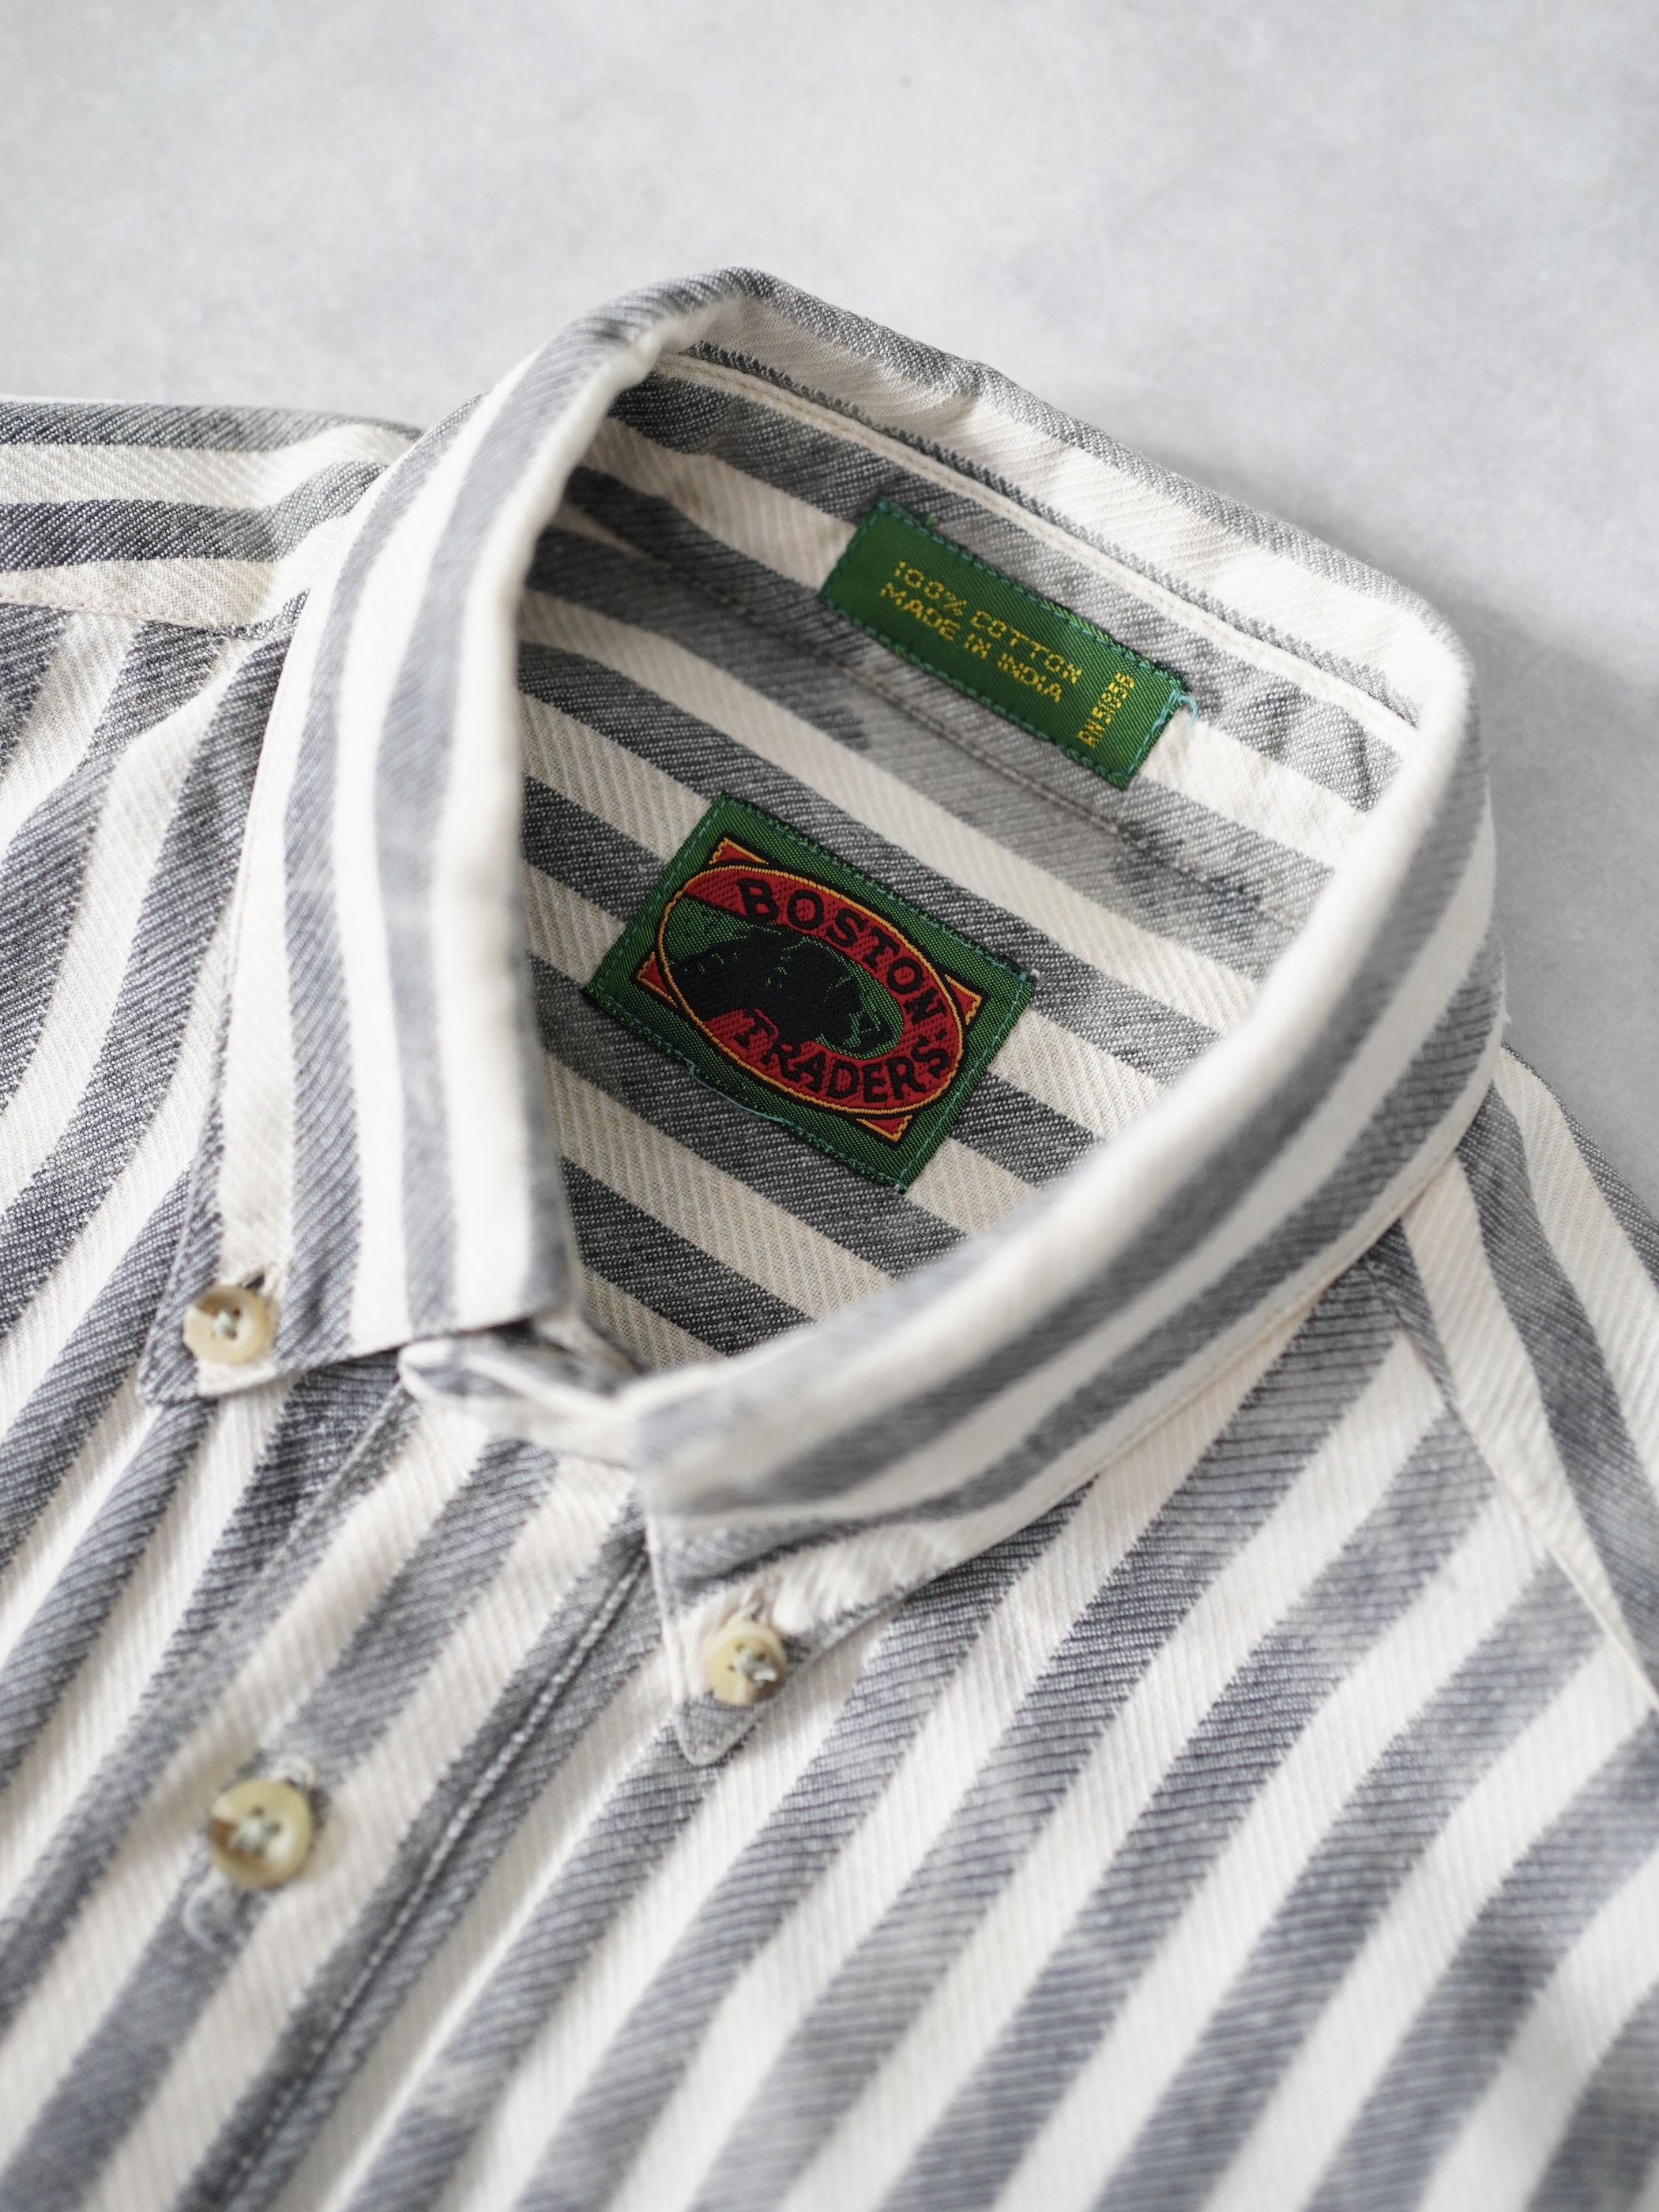 1990's BOSTON TRADERS Cotton Herringbone Stripe B.D. shirts / Made in India